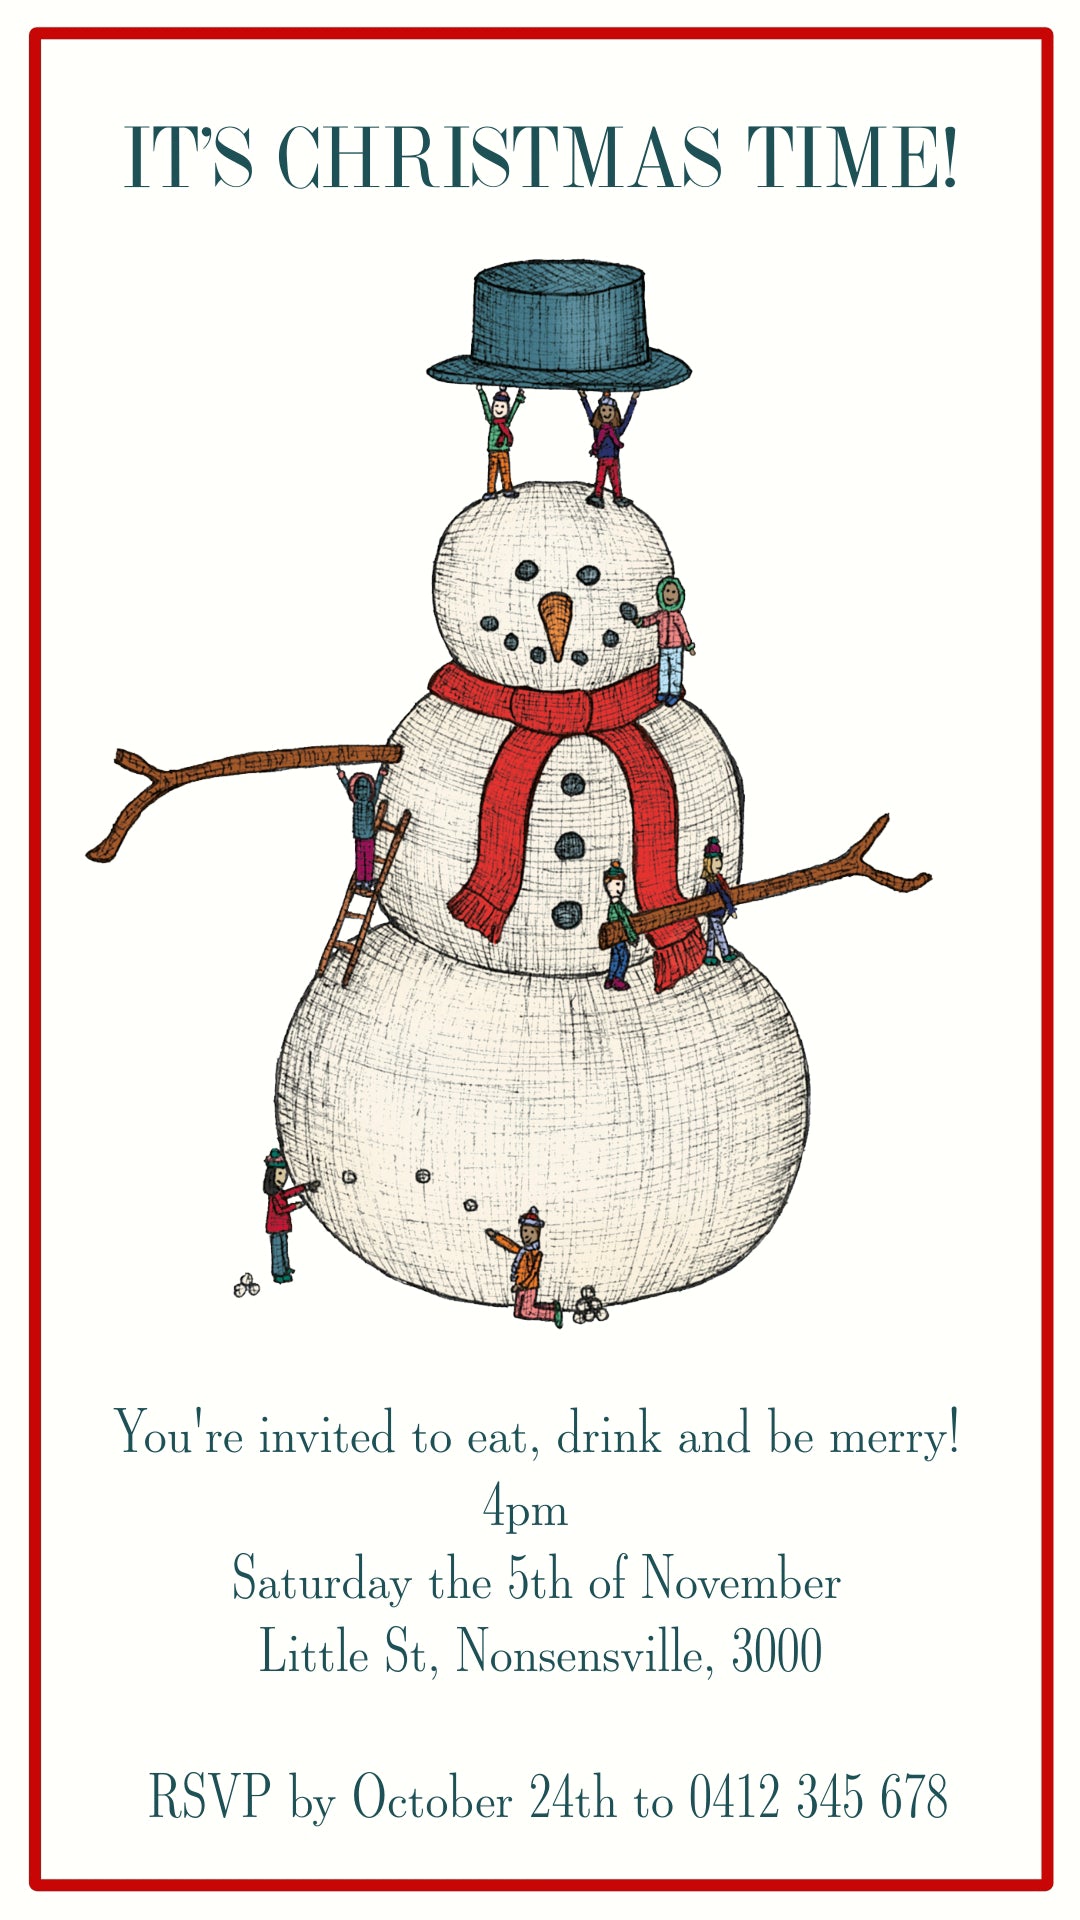 Christmas Party Snowman - Digital Invitation